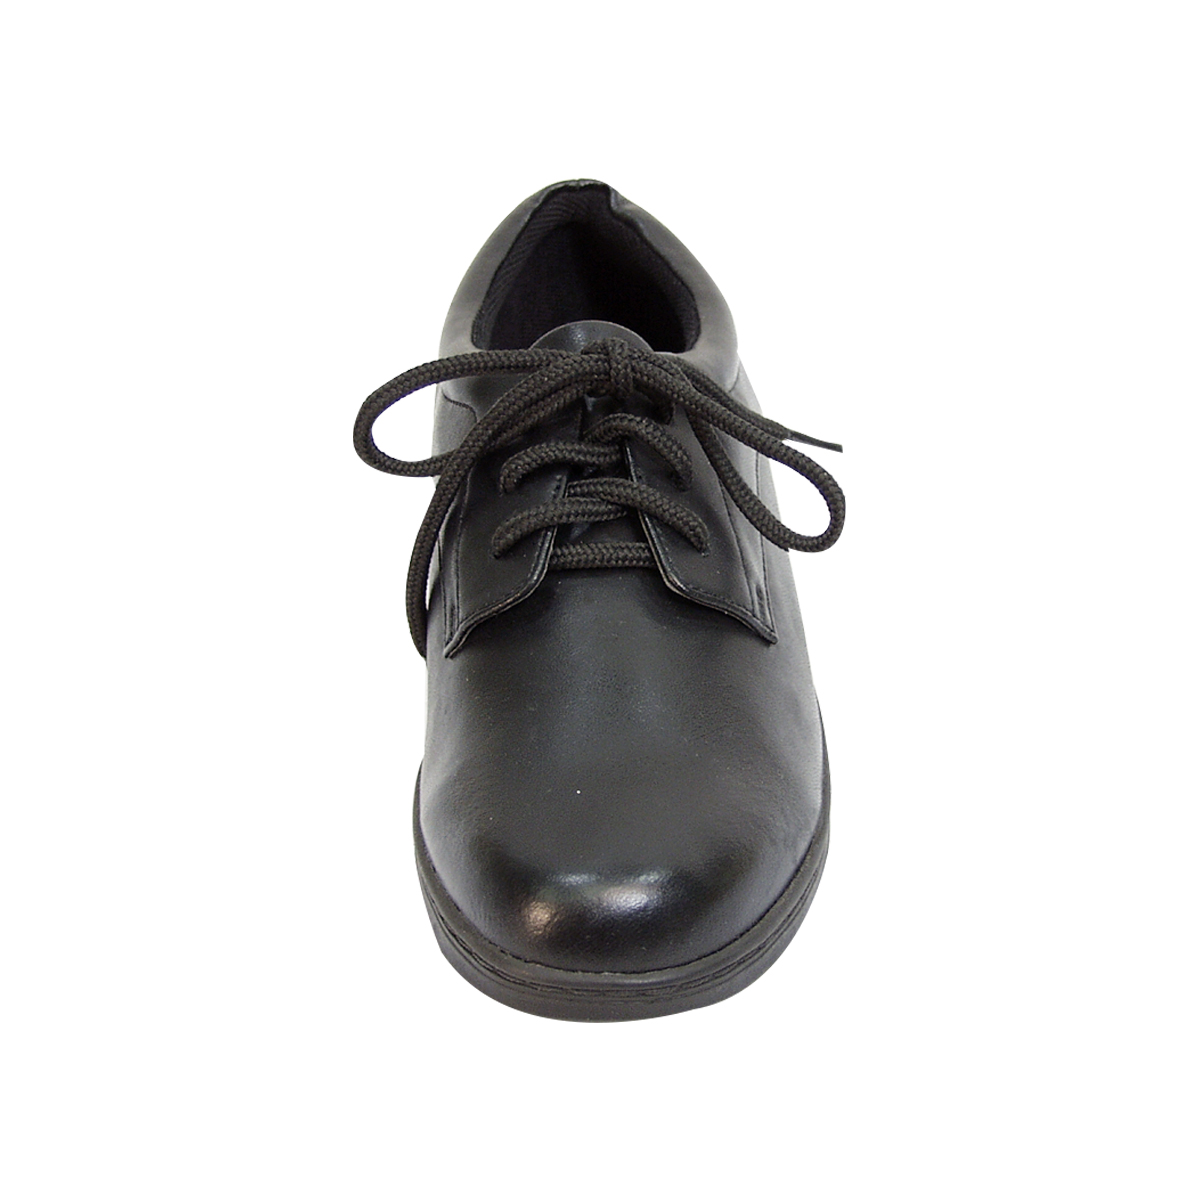 24 HOUR COMFORT Alice Wide Width Professional Sleek Shoe BLACK 12 - image 2 of 7